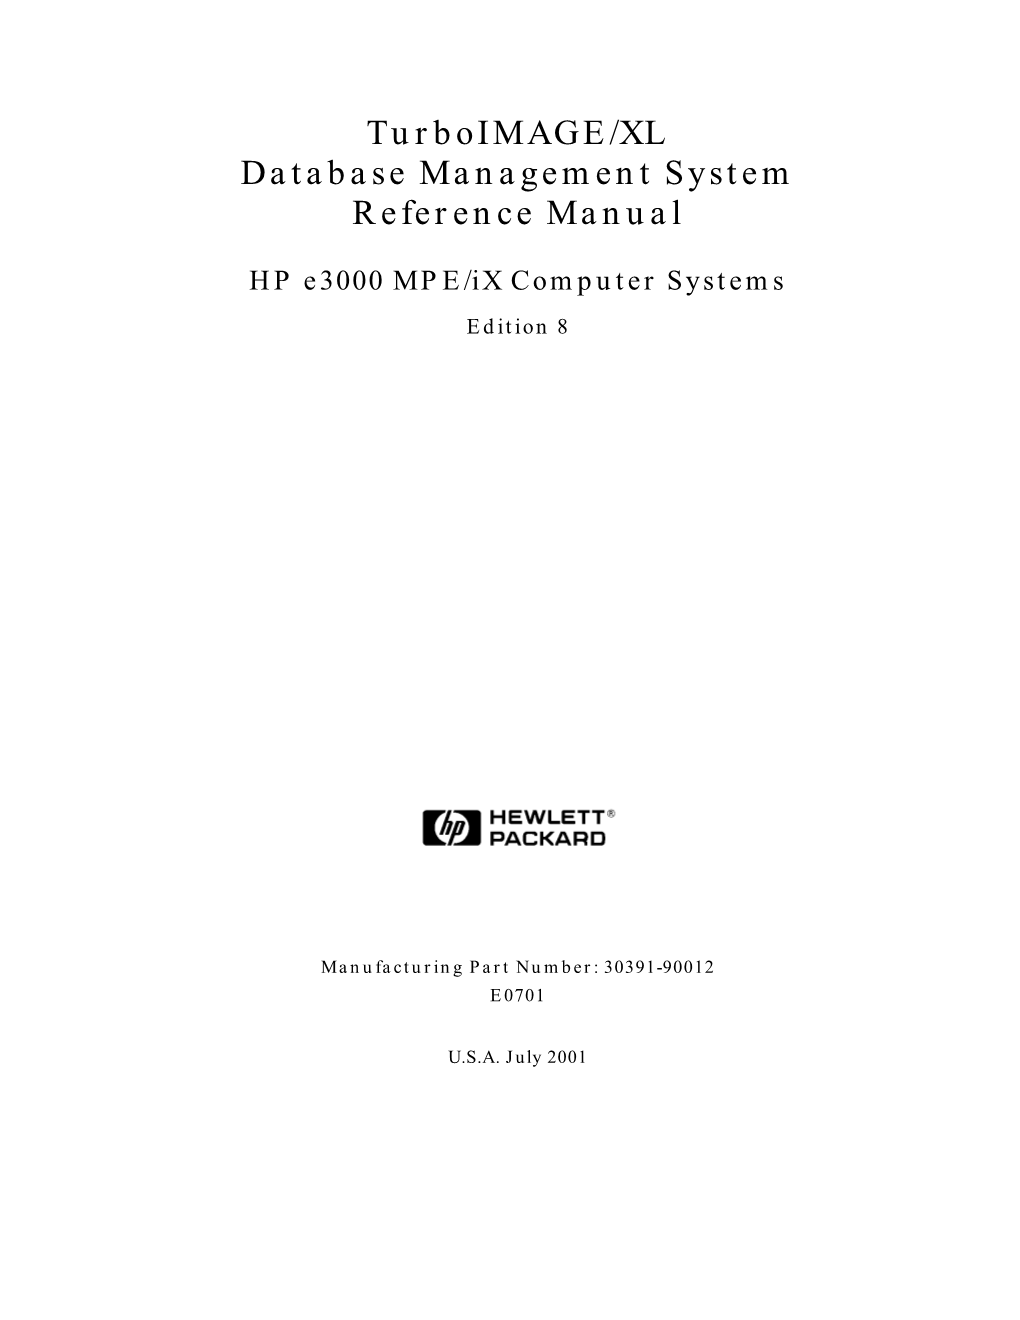 Turboimage/XL Database Management System Reference Manual